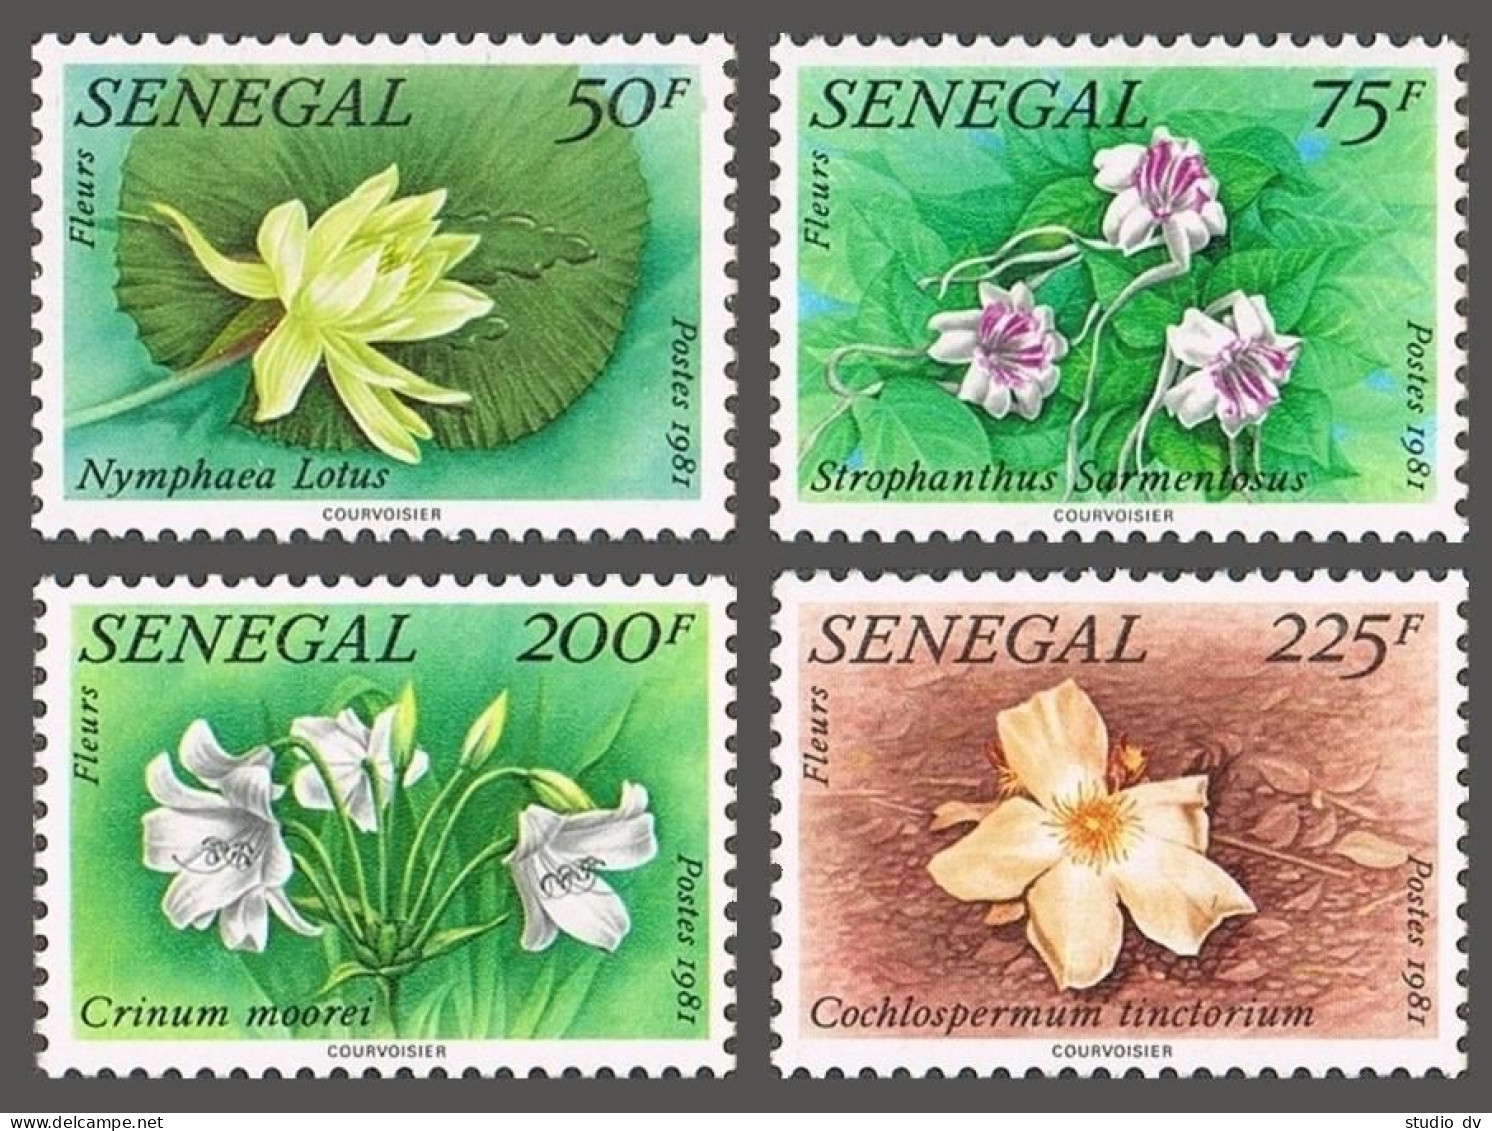 Senegal 551-554, MNH. Michel 755-758. Local Flora, 1982. - Senegal (1960-...)